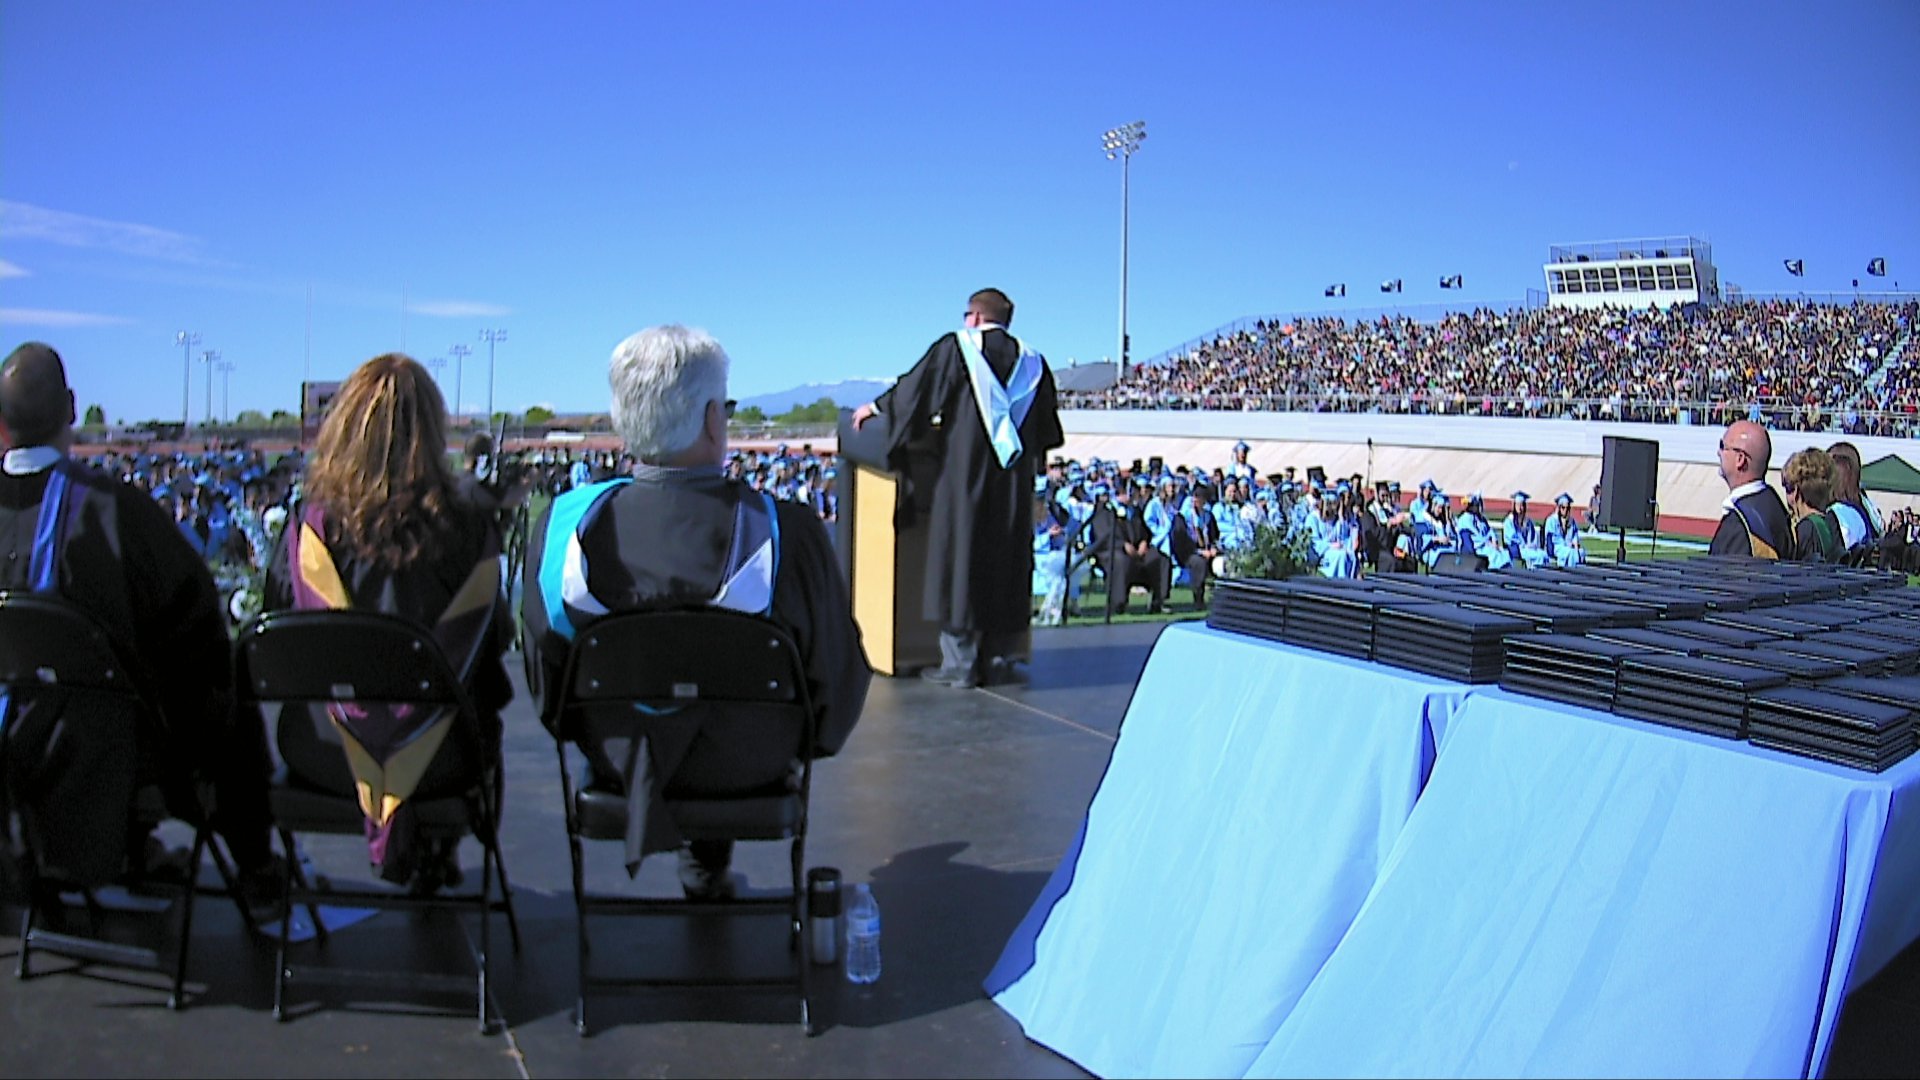 2019 Pueblo West High School Commencement Ceremony on Livestream